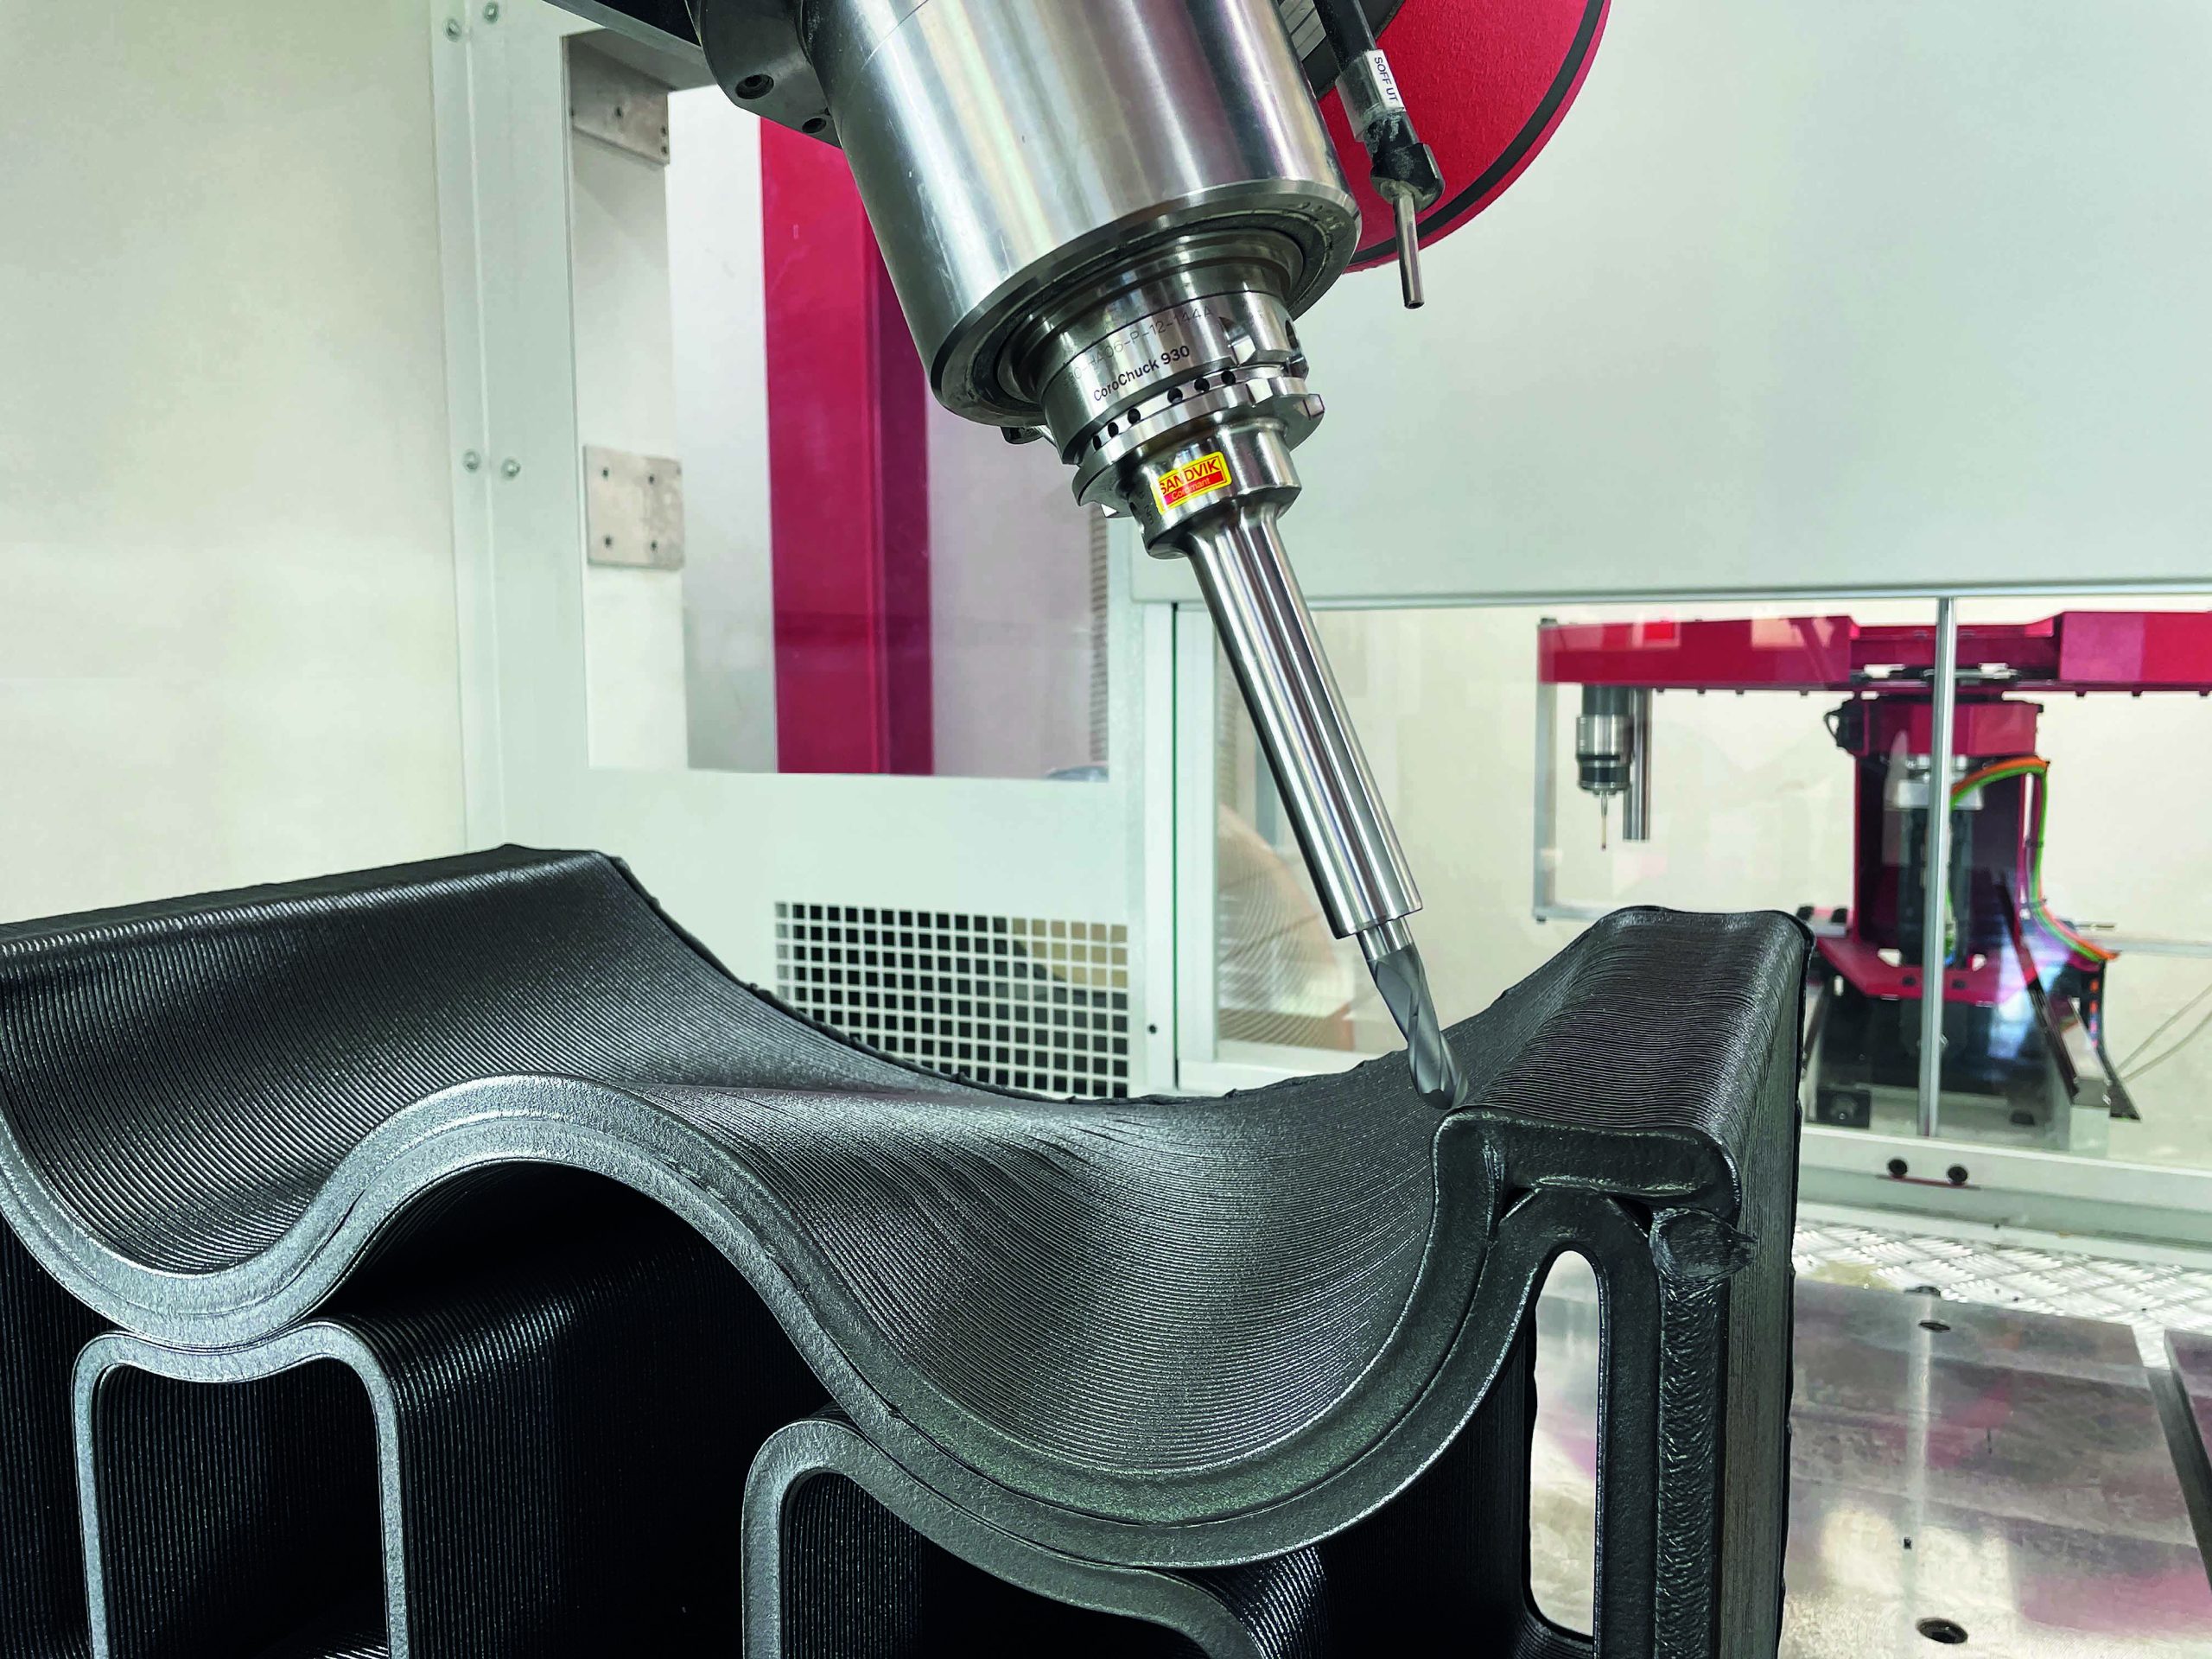  Belotti BEAD machine with Sandvik Coromant tool for carbon fiber cnc milling